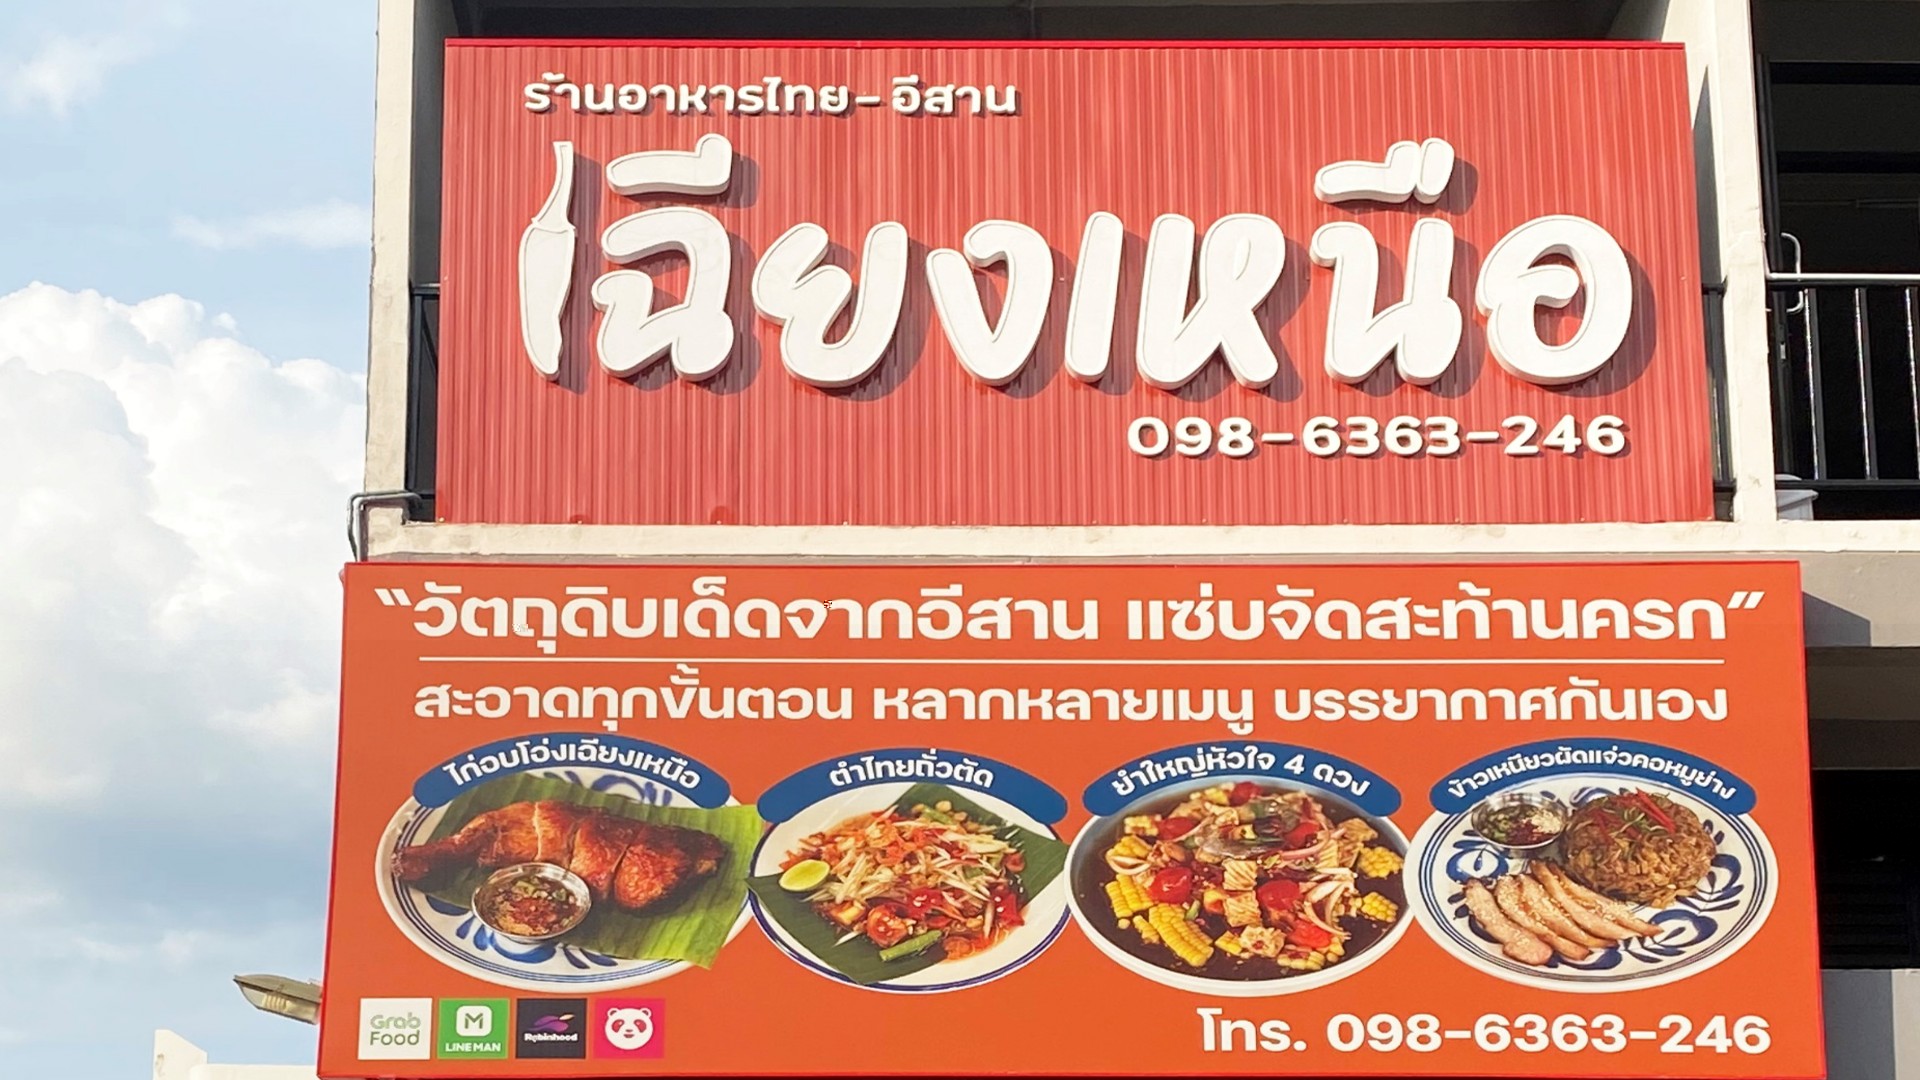 chiangnuer ร้านเฉียงเหนือ อาหารไทย-อีสาน